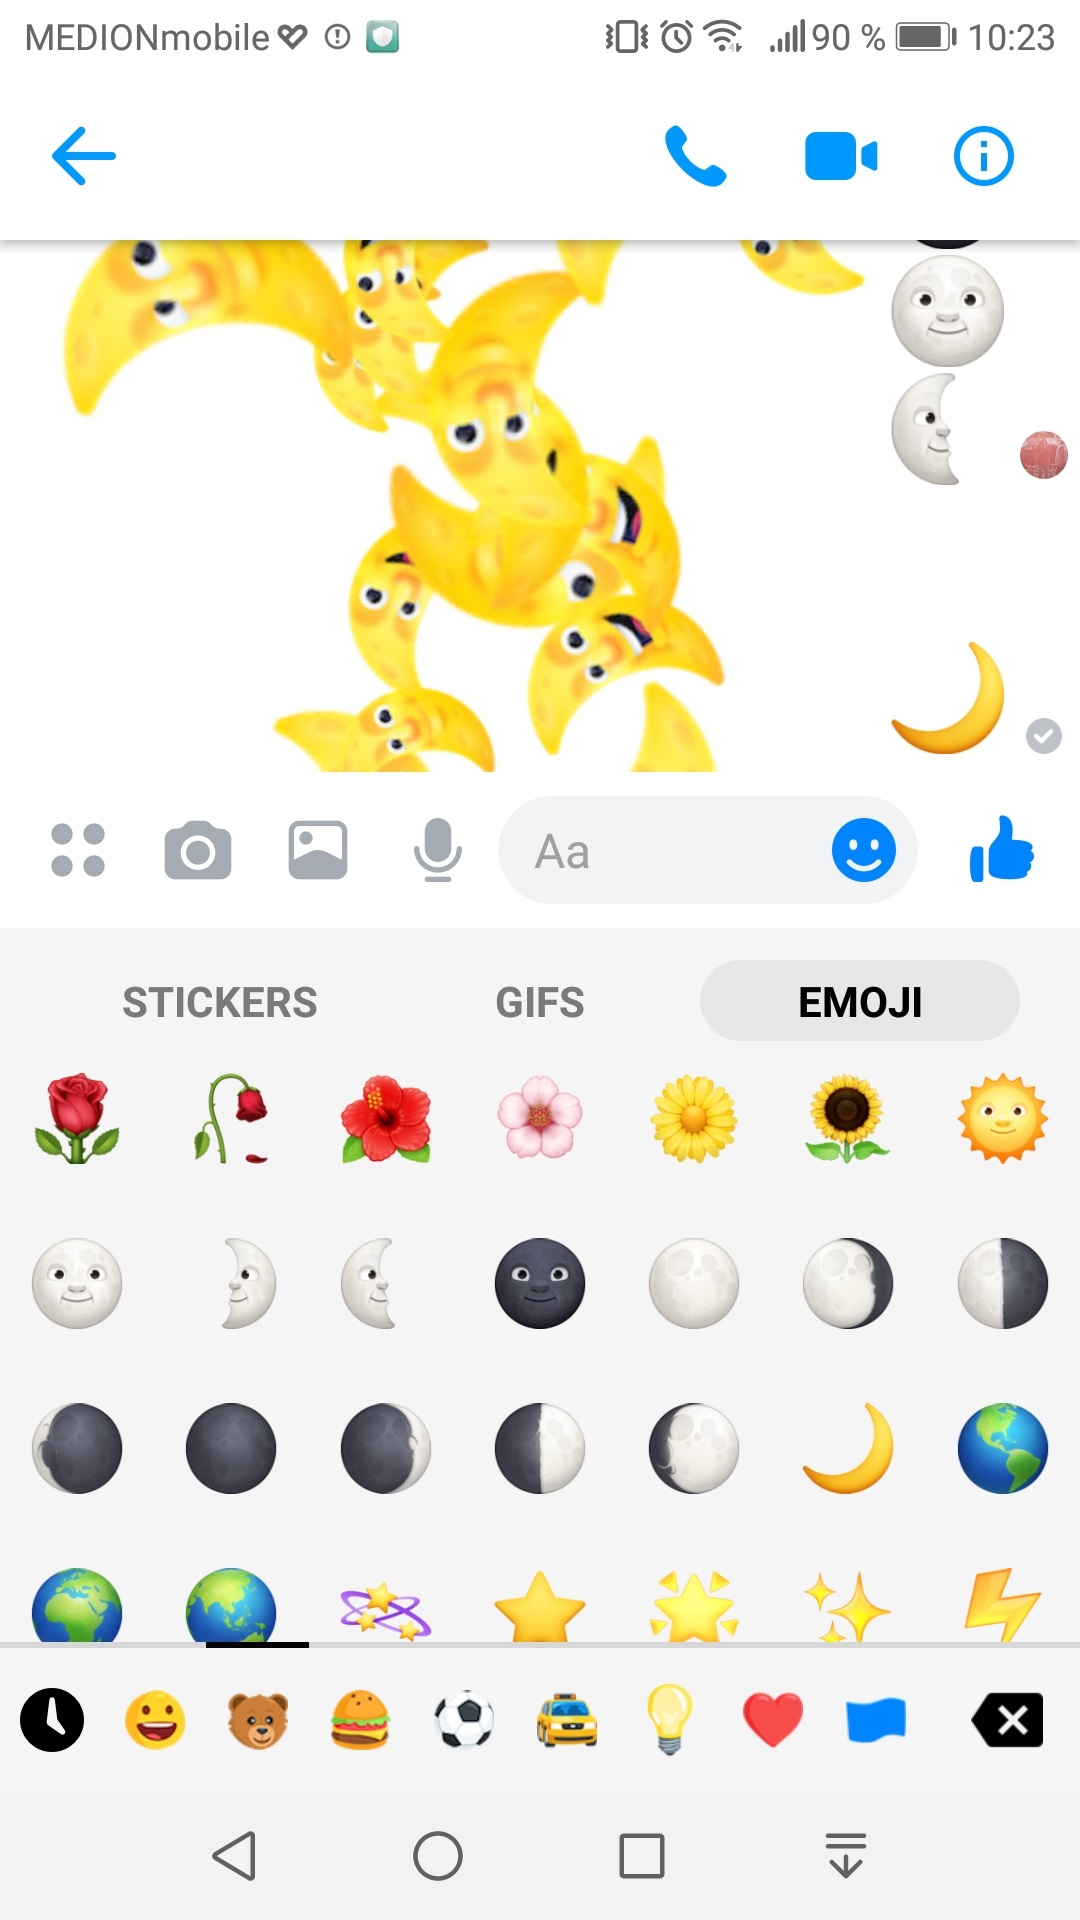 Facebook Messenger Dark Mode屏幕截图